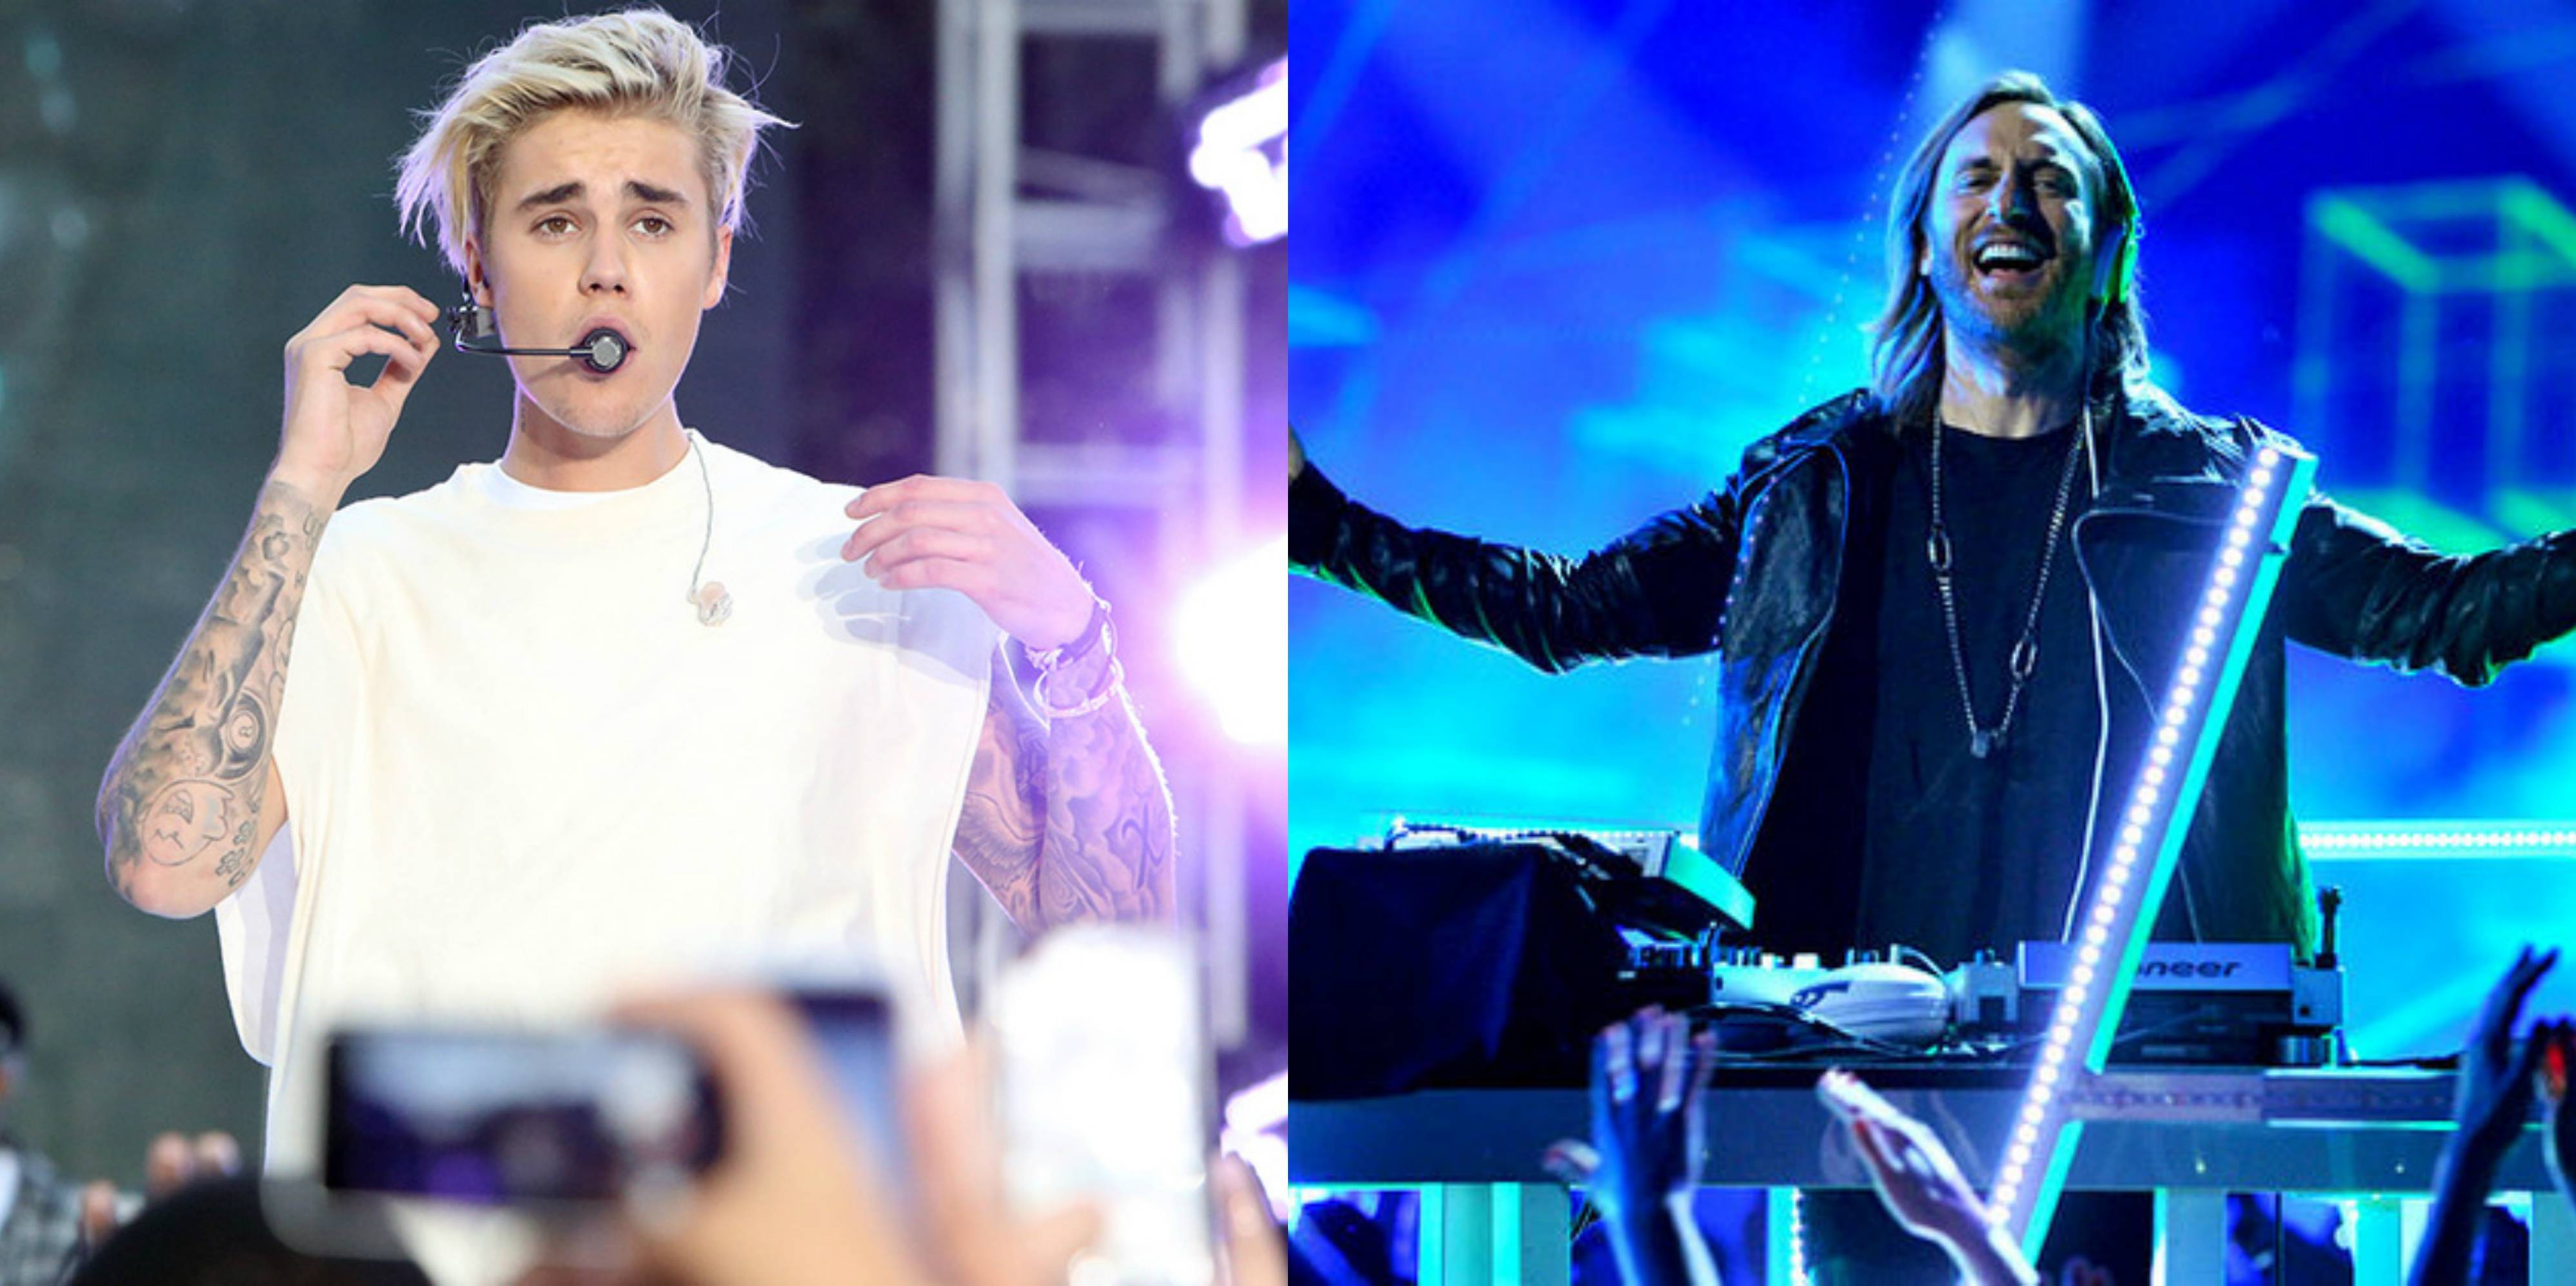 David Guetta y Justin Bieber estrenan video de “2U”. Cusica plus.